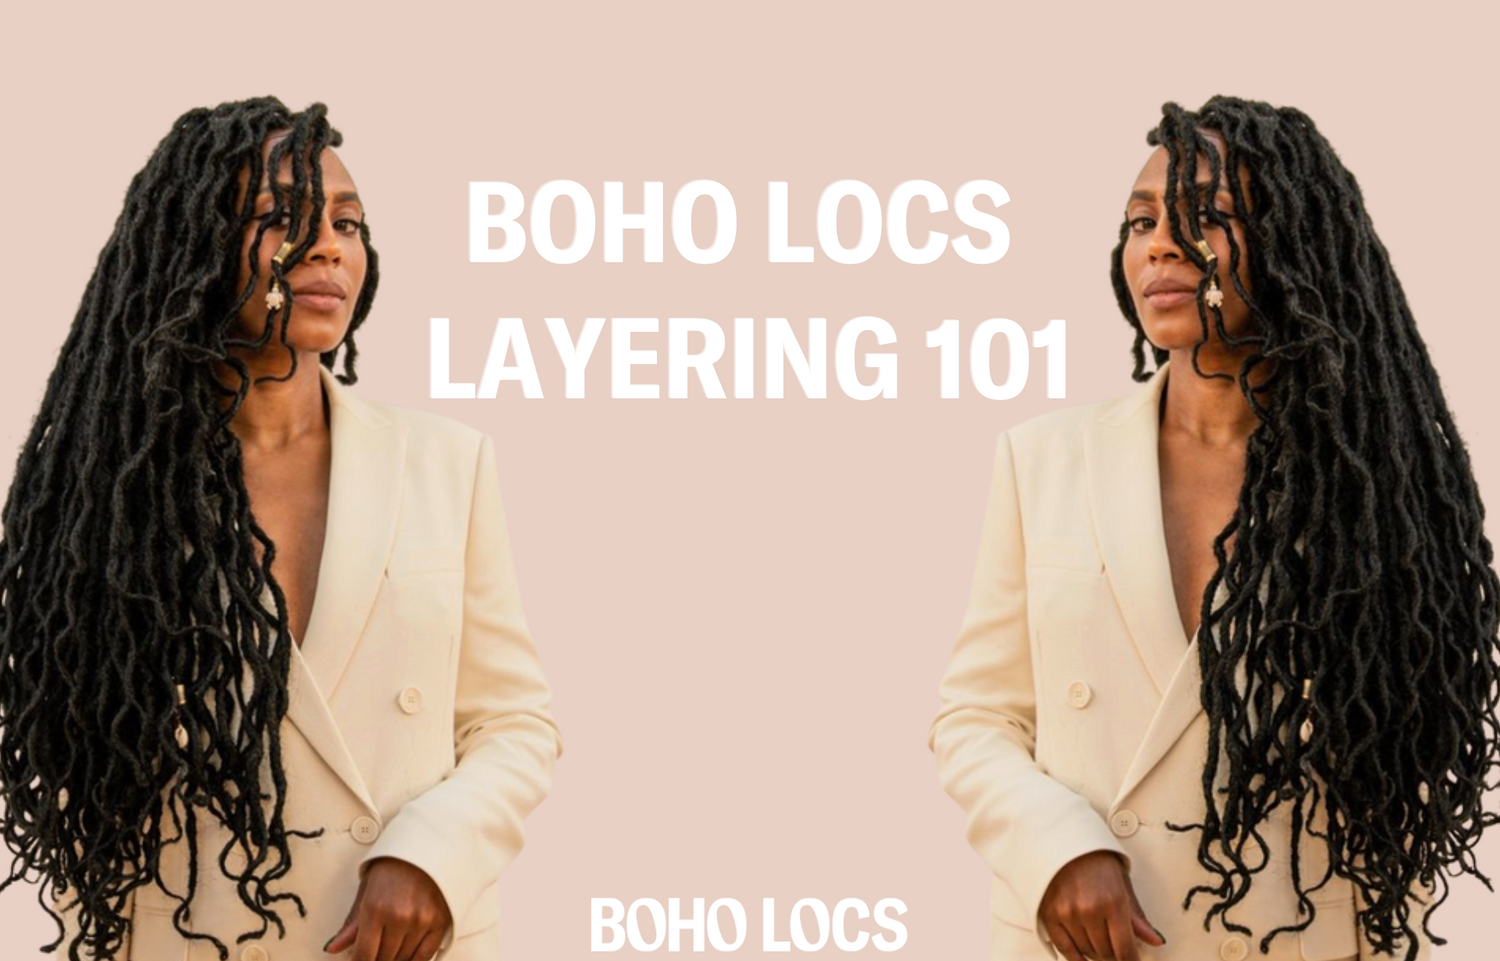 Boho Locs Layering 101